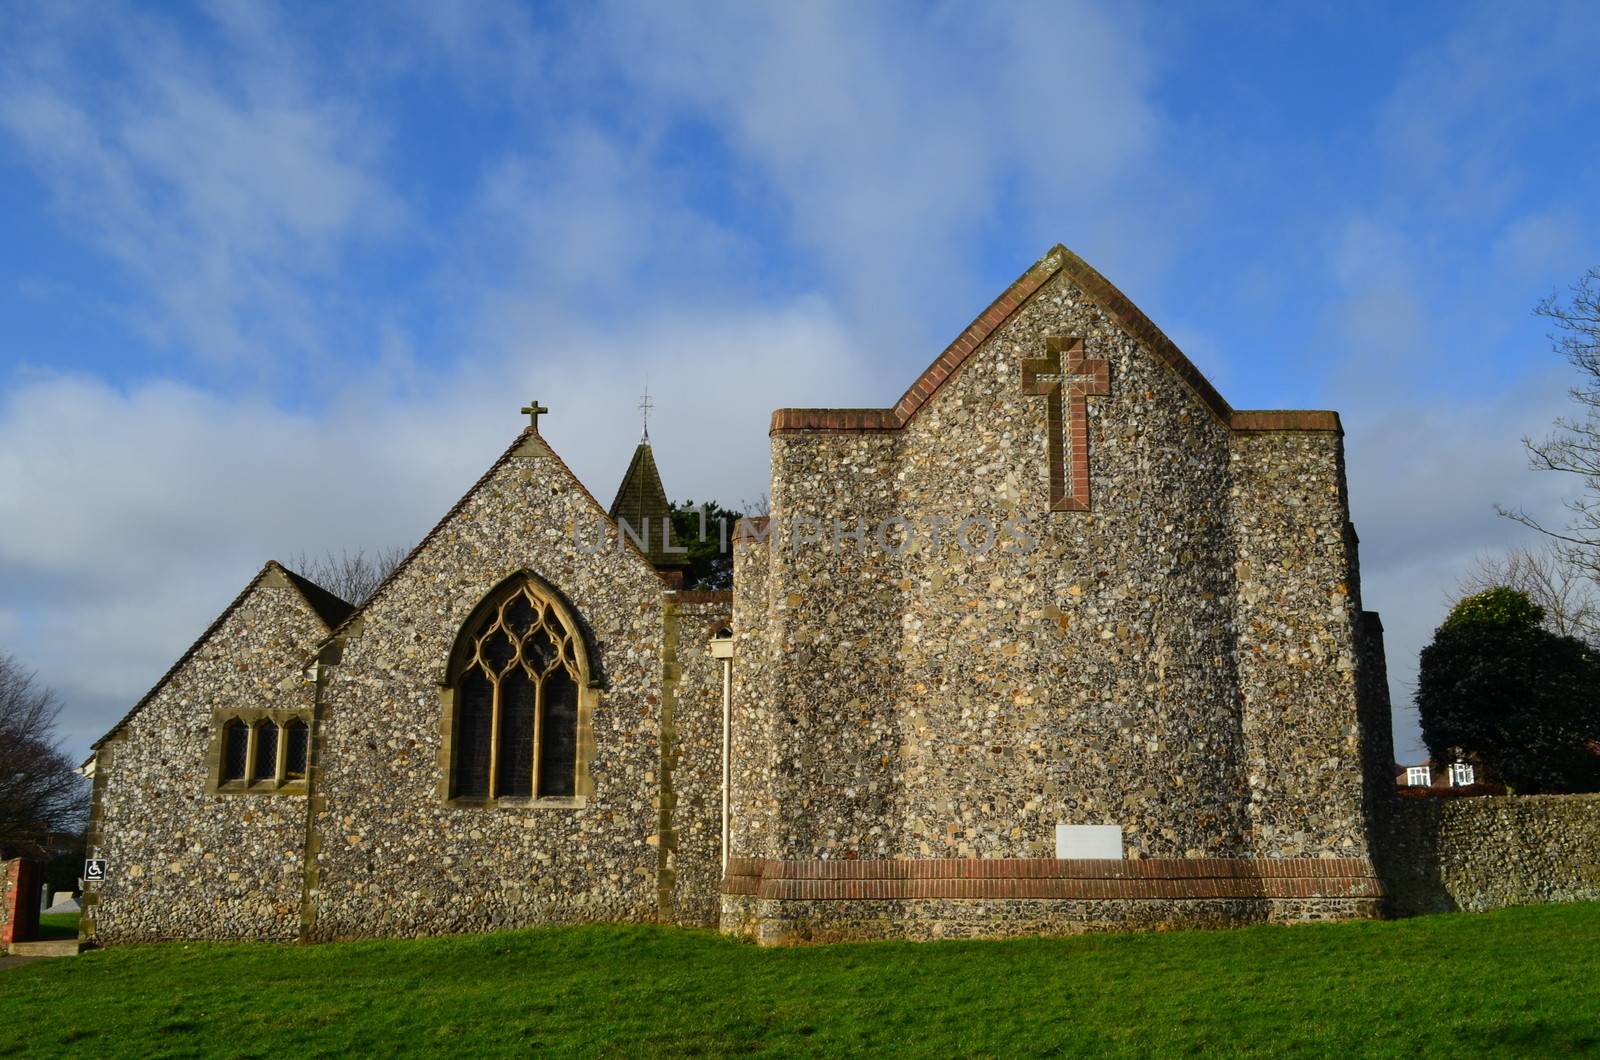 Built in 1890 this fine flint built Parish church is at Blatchington,East Sussex, England.